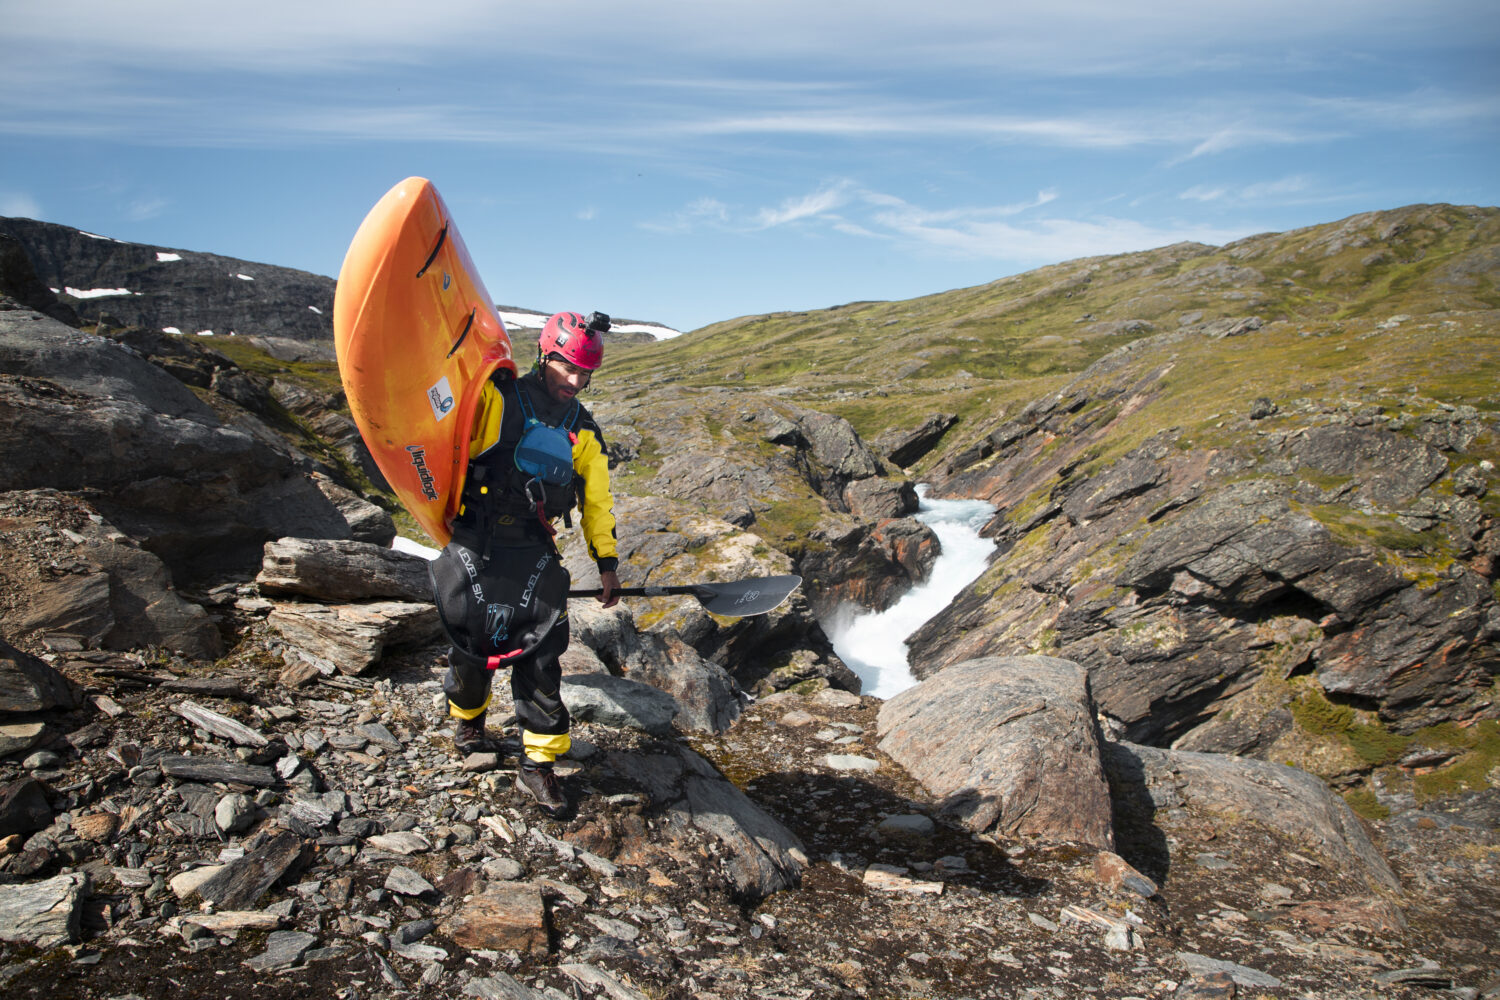 2021 - Story - Mission kayak en Laponie, l’aventure en Duster